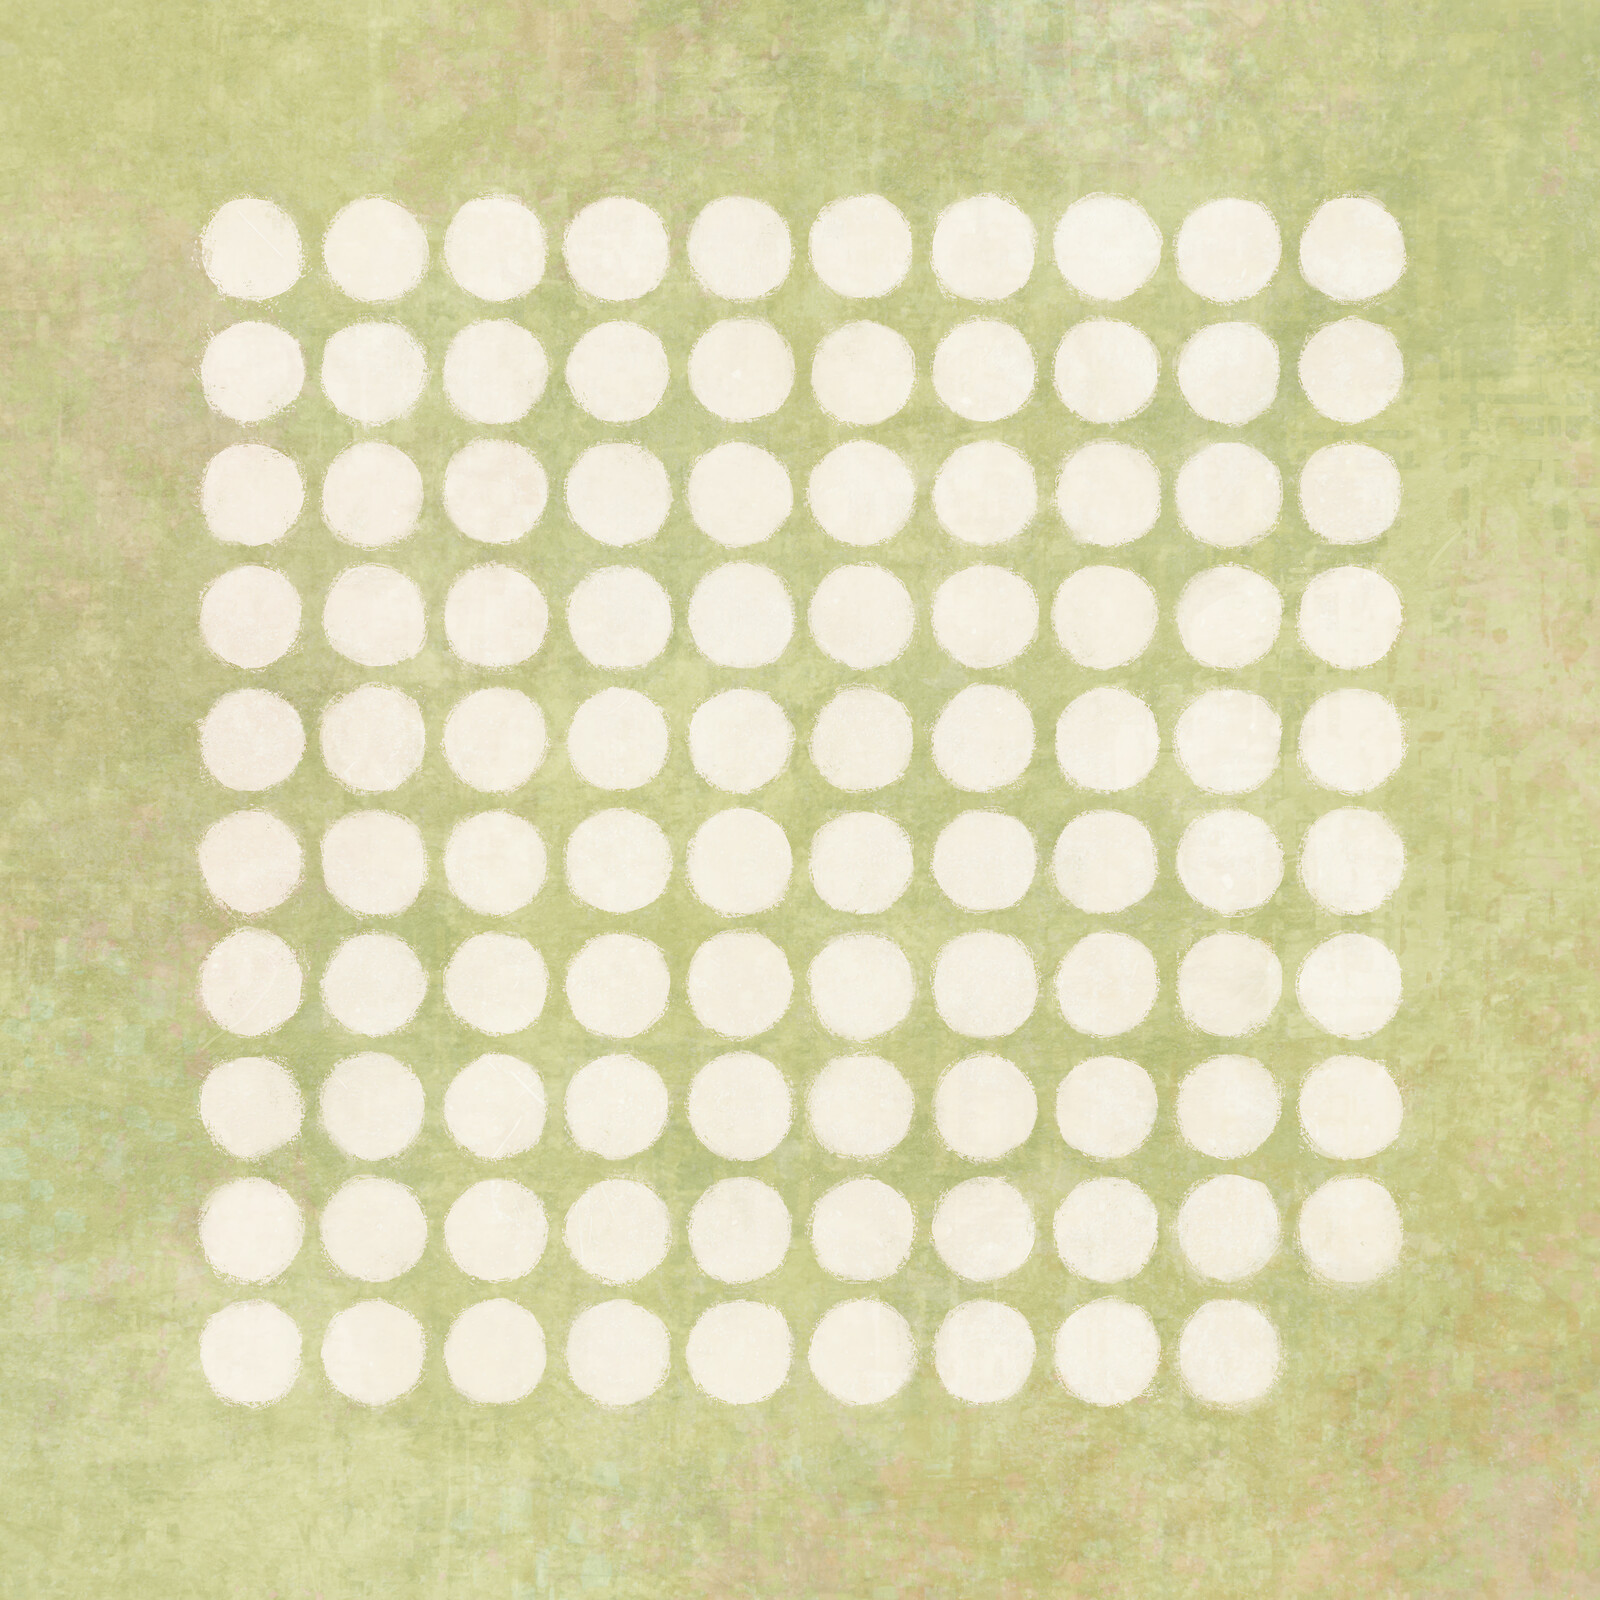 Ninety-nine white circles in a grid.